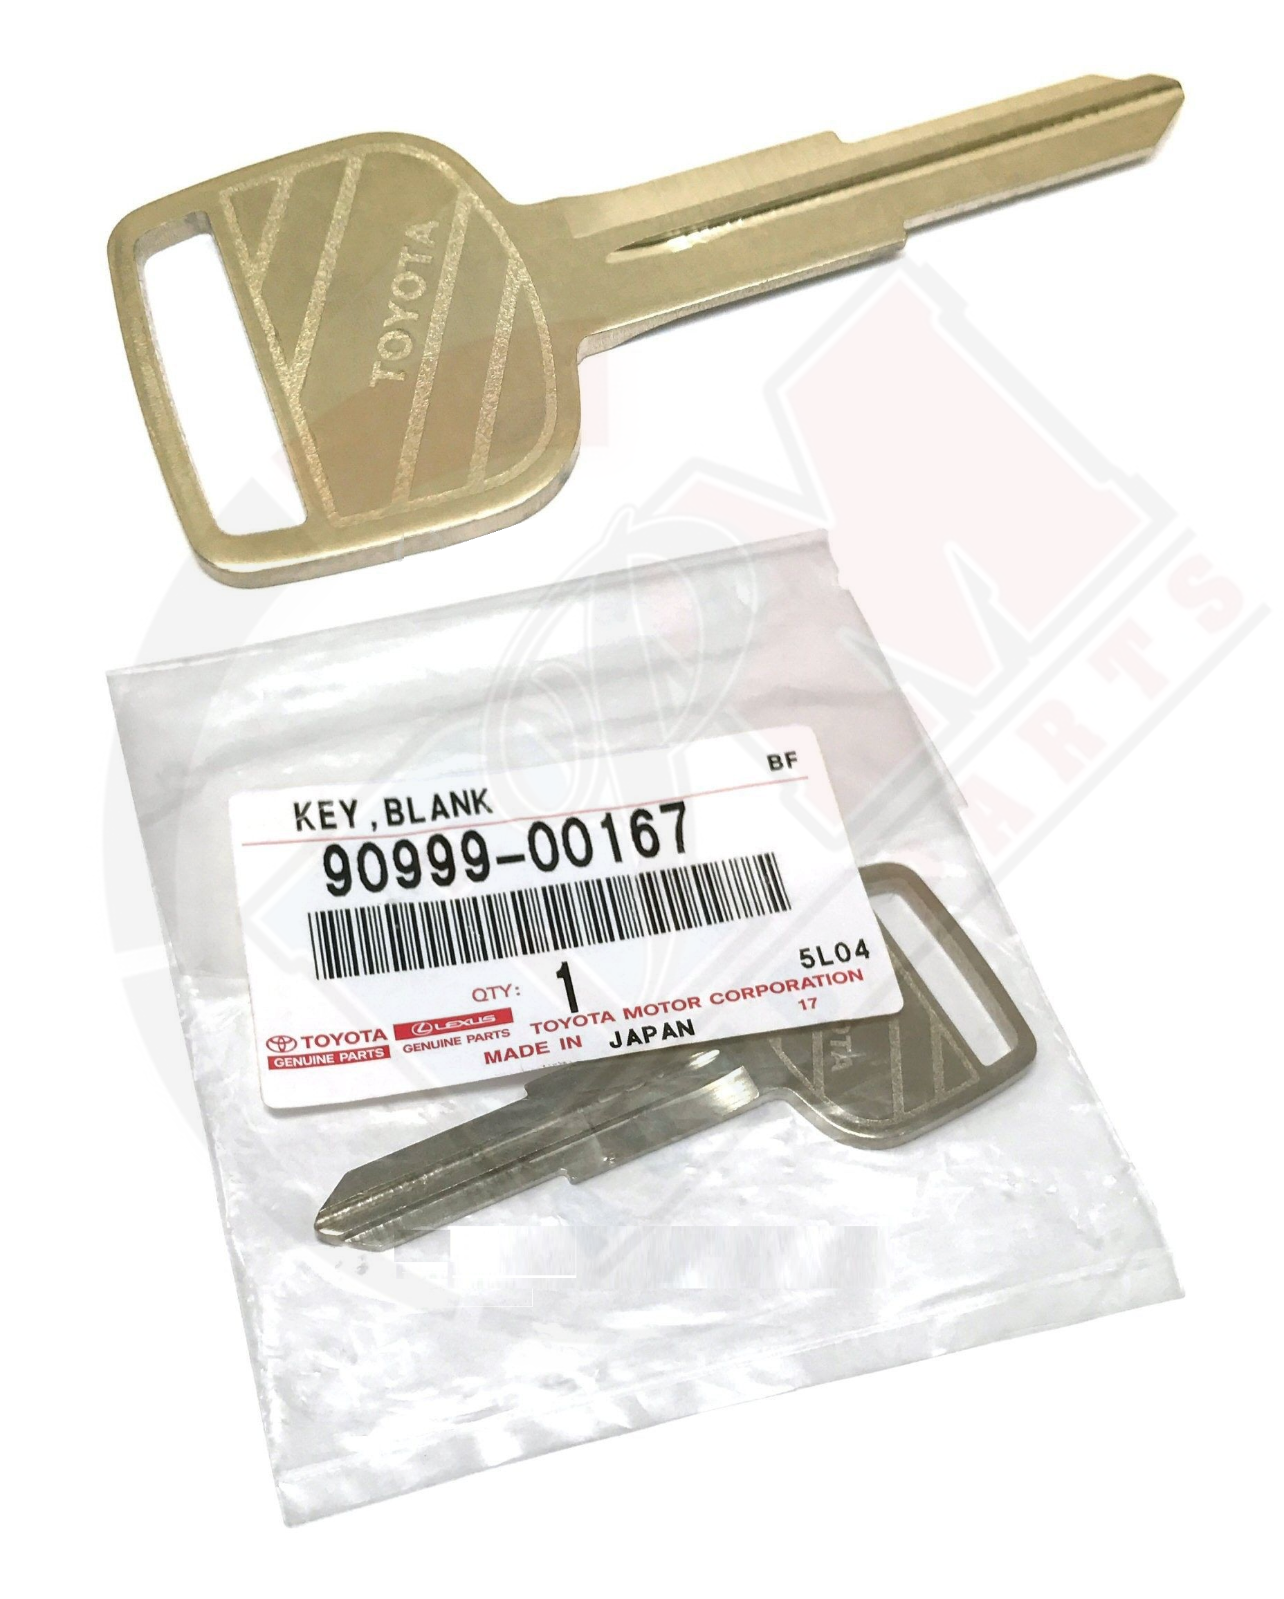 Genuine Toyota Master Key Blank Uncut for Celica Paseo Previa Tercel  90999-00167 for sale online | eBay